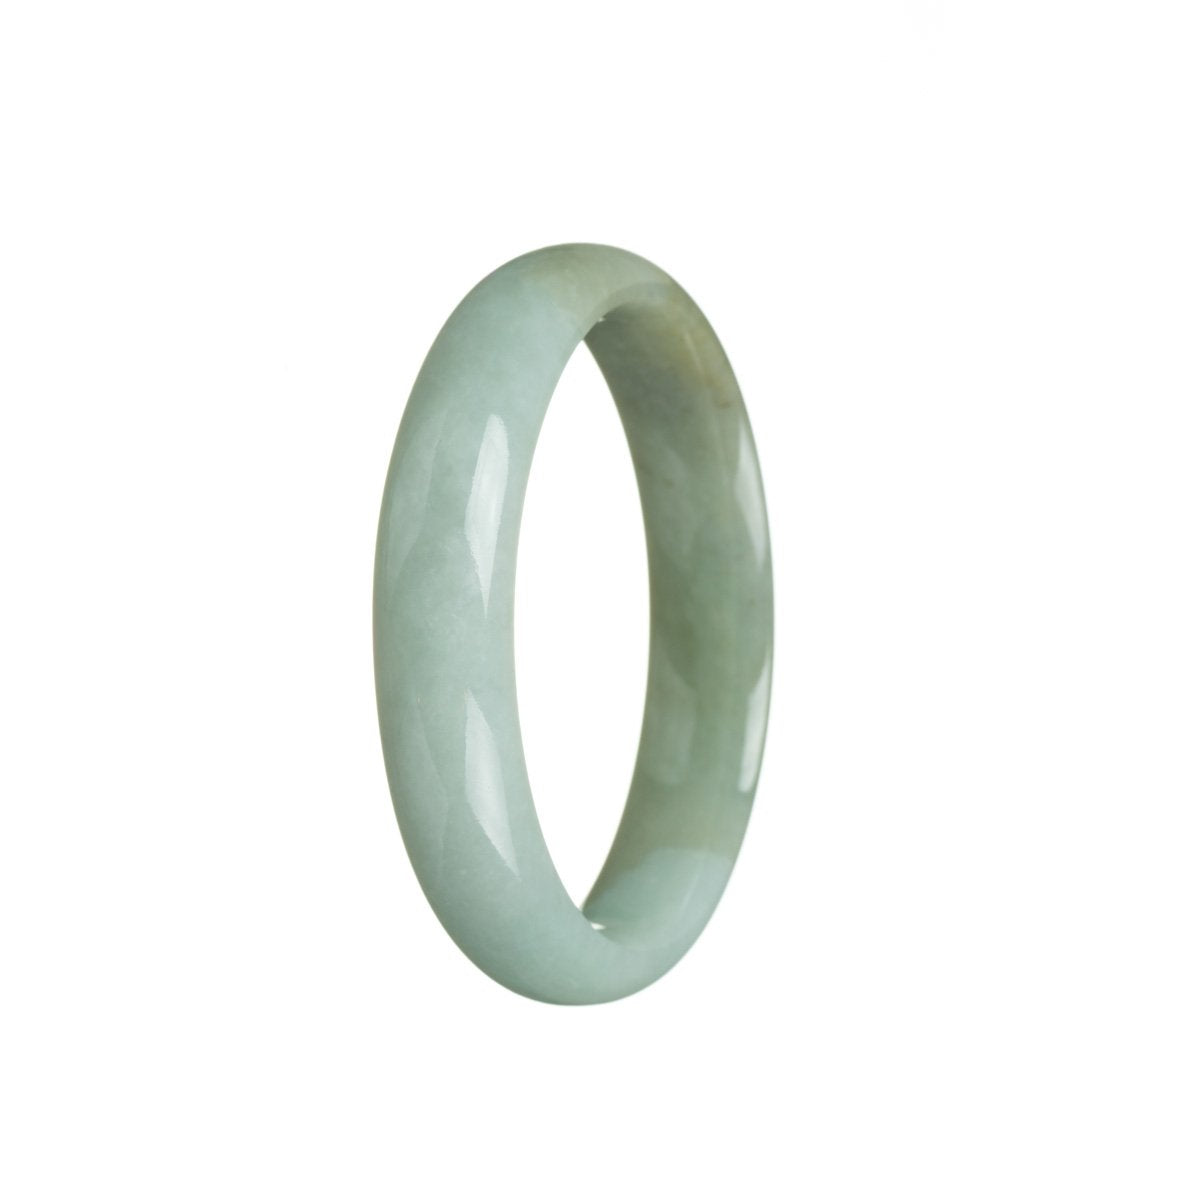 A light green jadeite jade bangle bracelet with a half-moon shape, measuring 55mm.